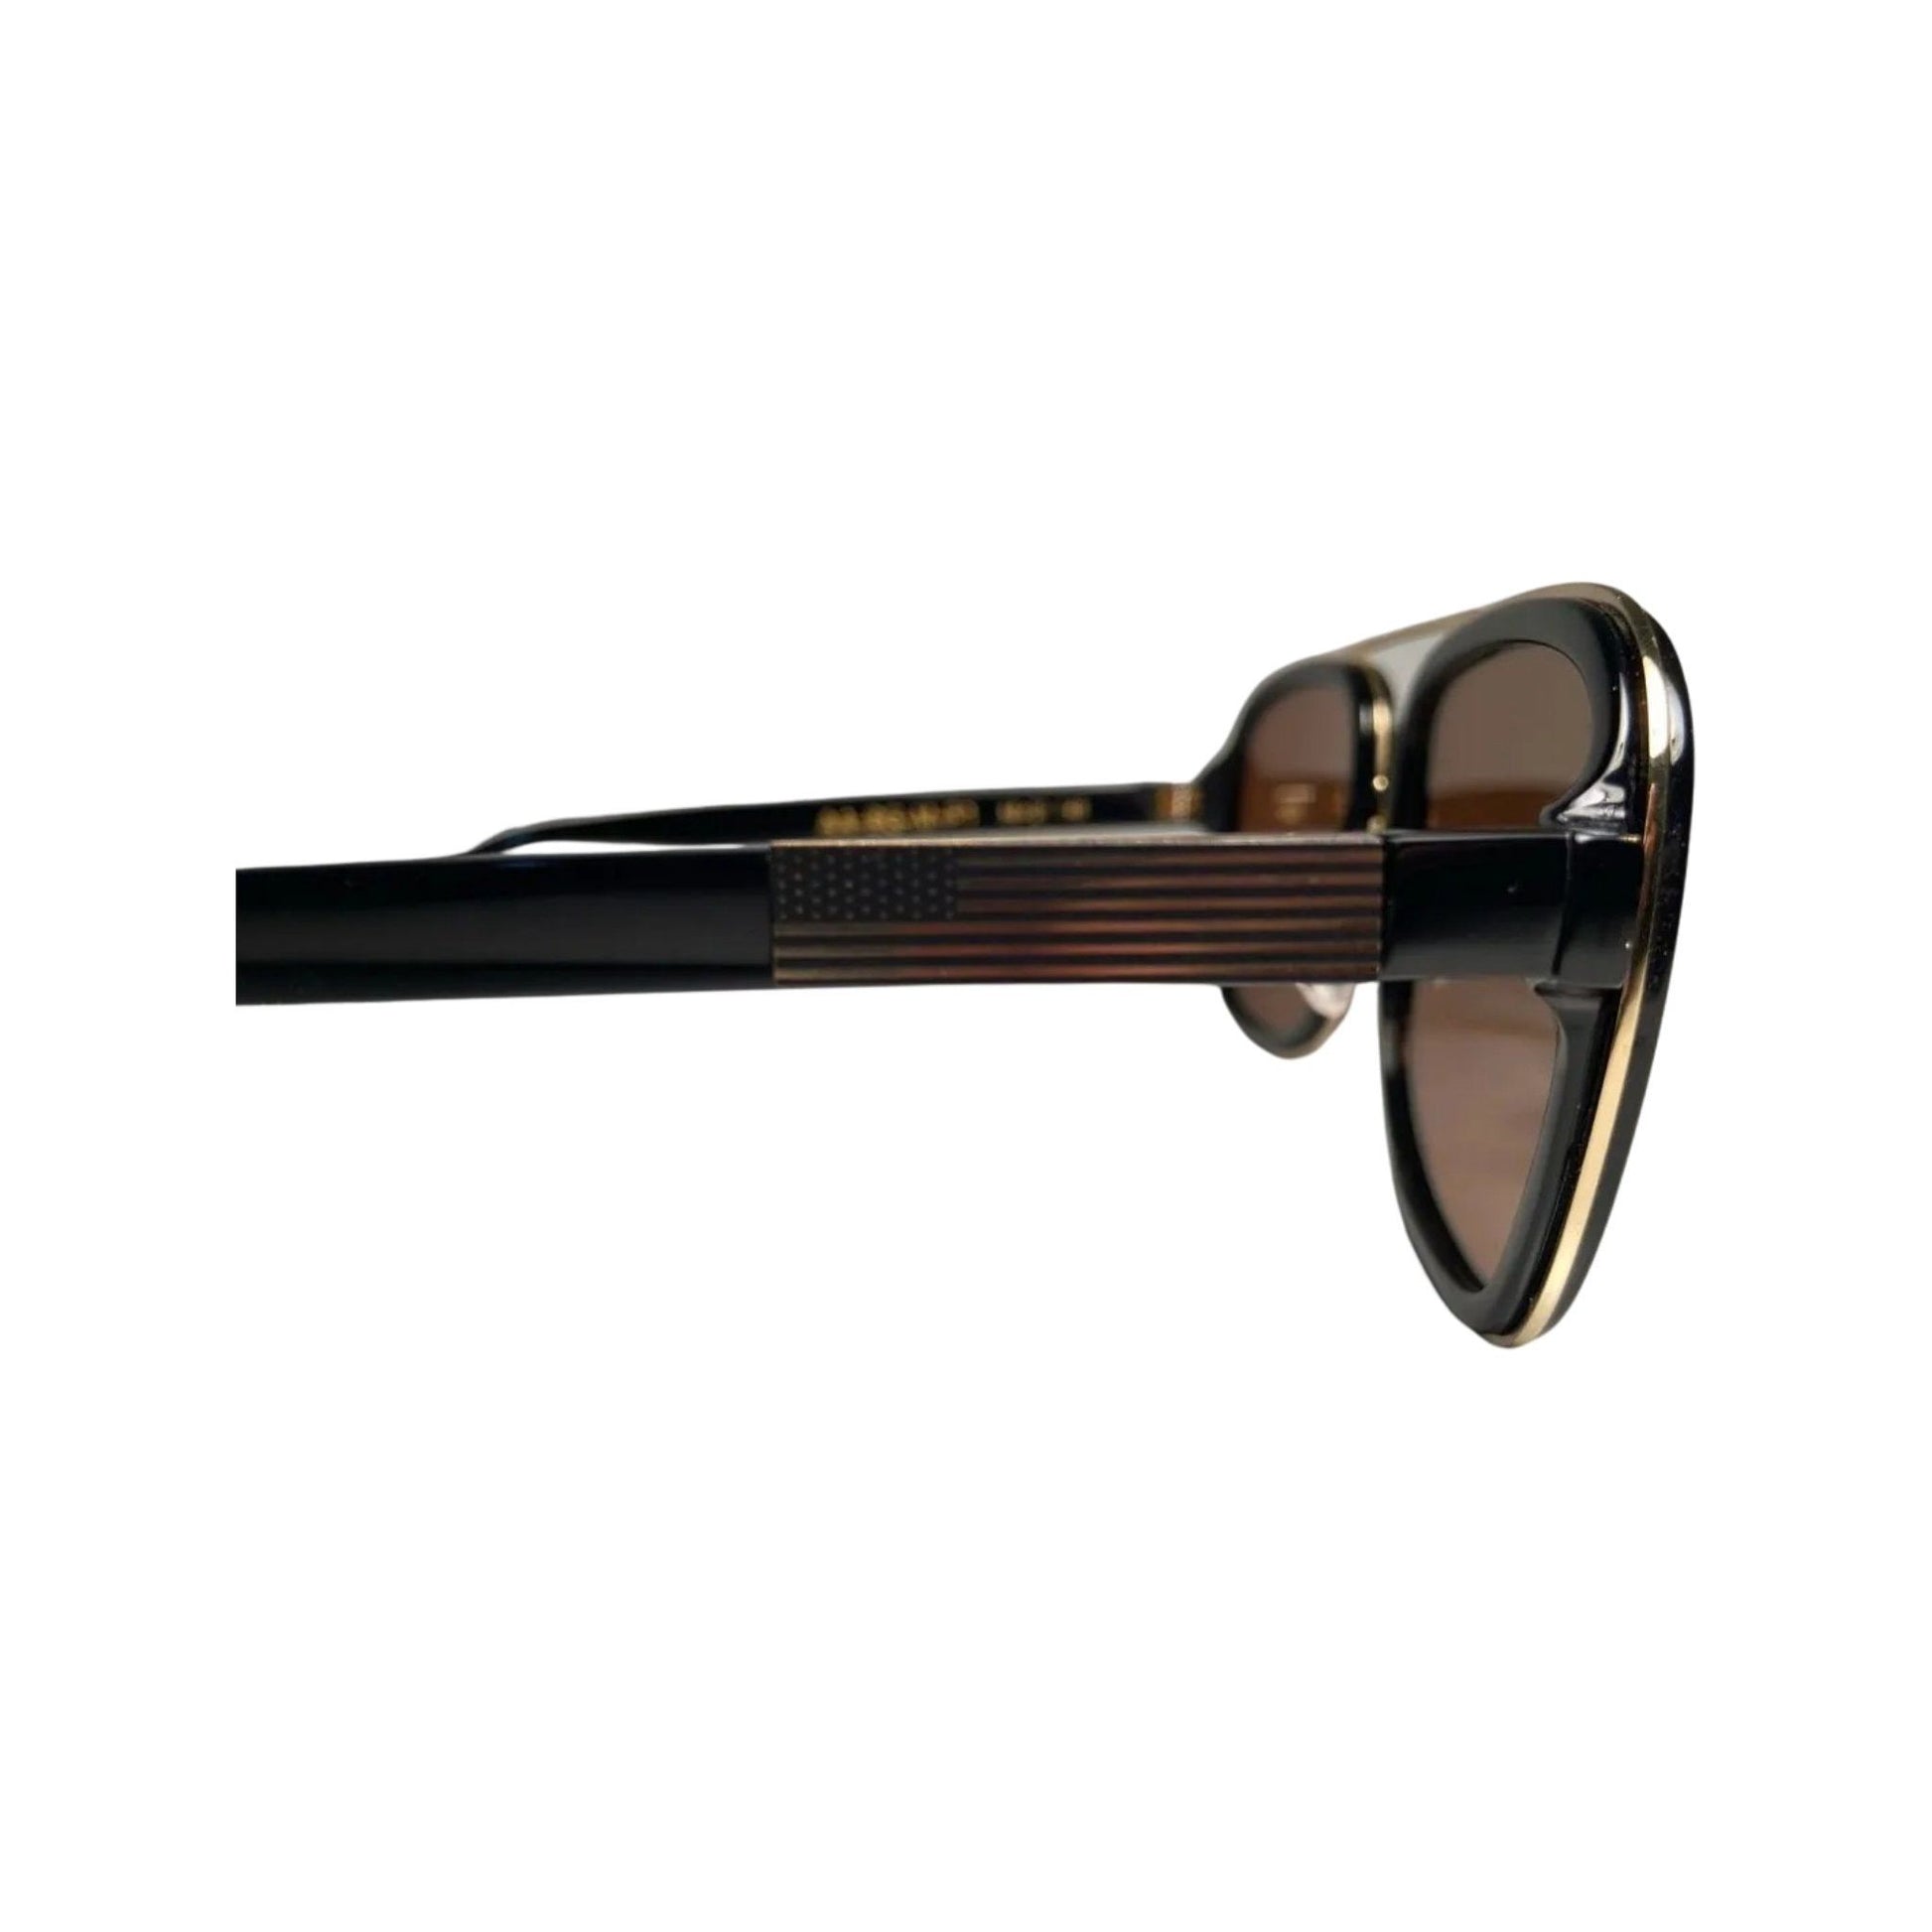 America - Black Edition Sunglasses (M) - #cik#